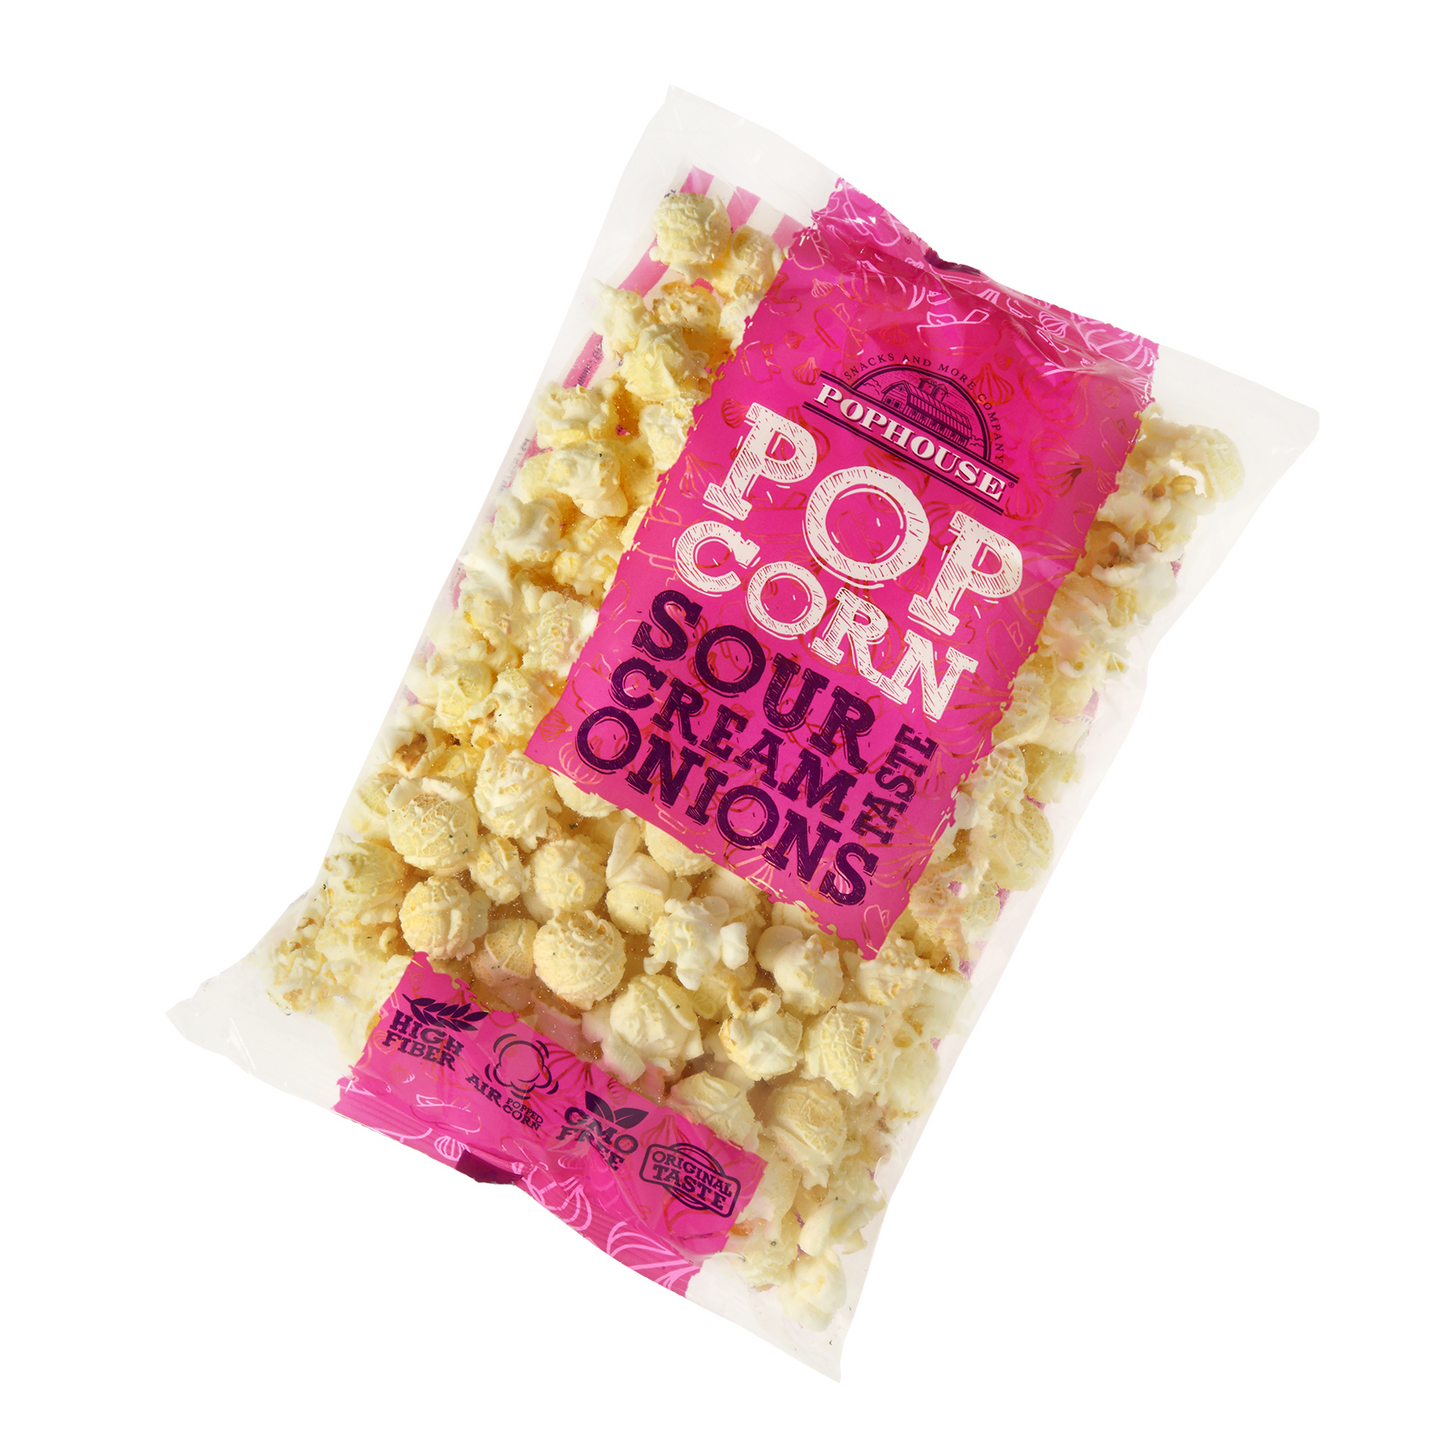 Pophouse popcorn 65g sourcream-onion